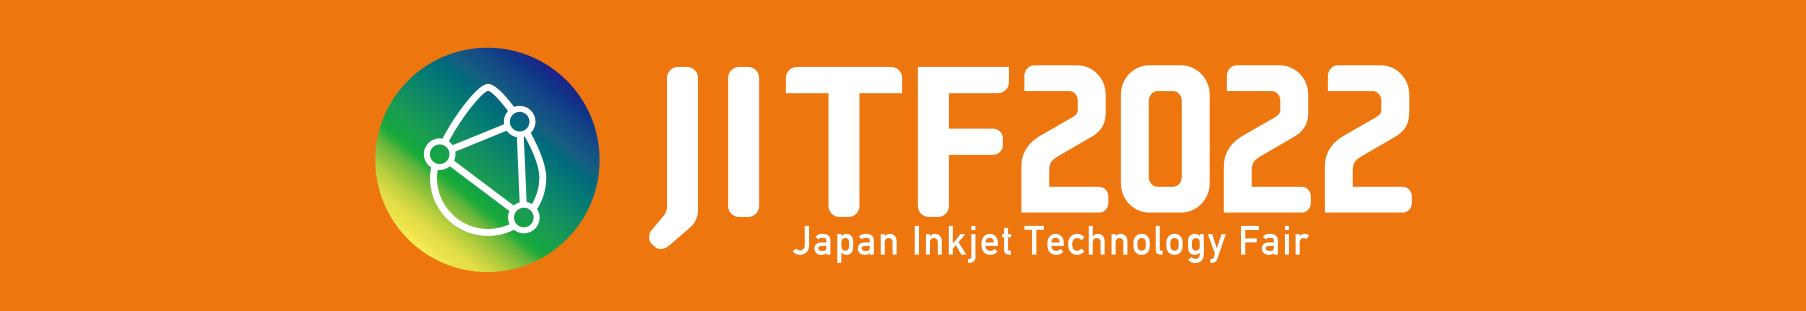 JITF_logo_483x84.png